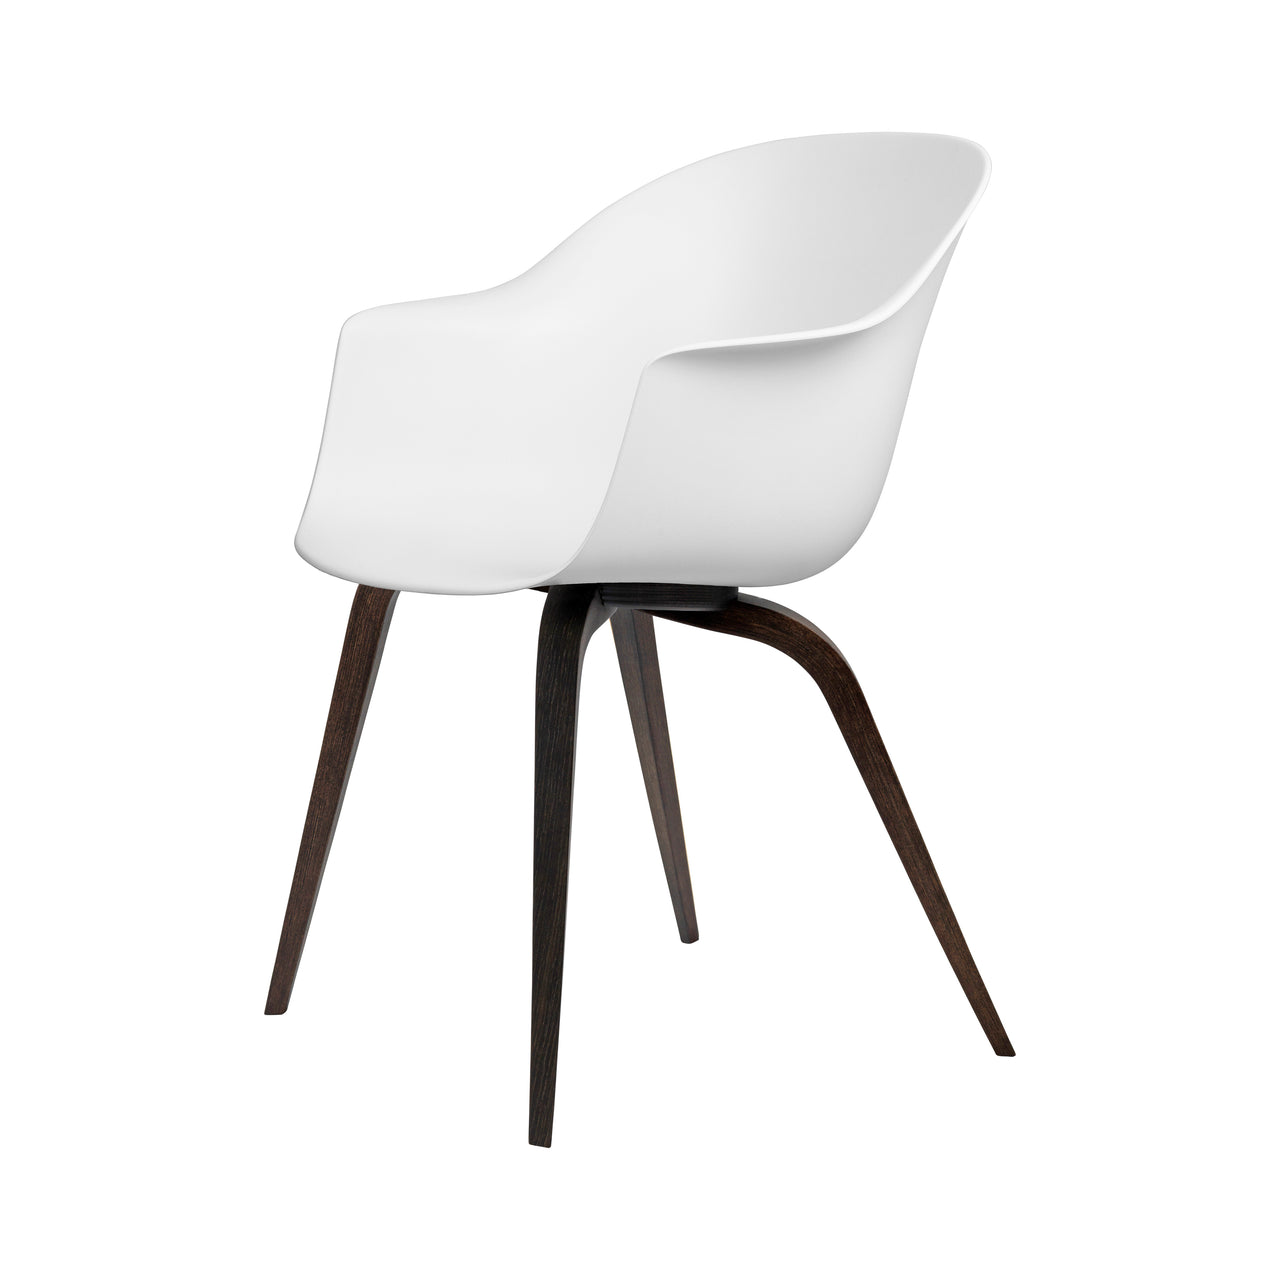 Bat Dining Chair: Wood Base + Smoked Oak + Alabaster White + Plastic Glides